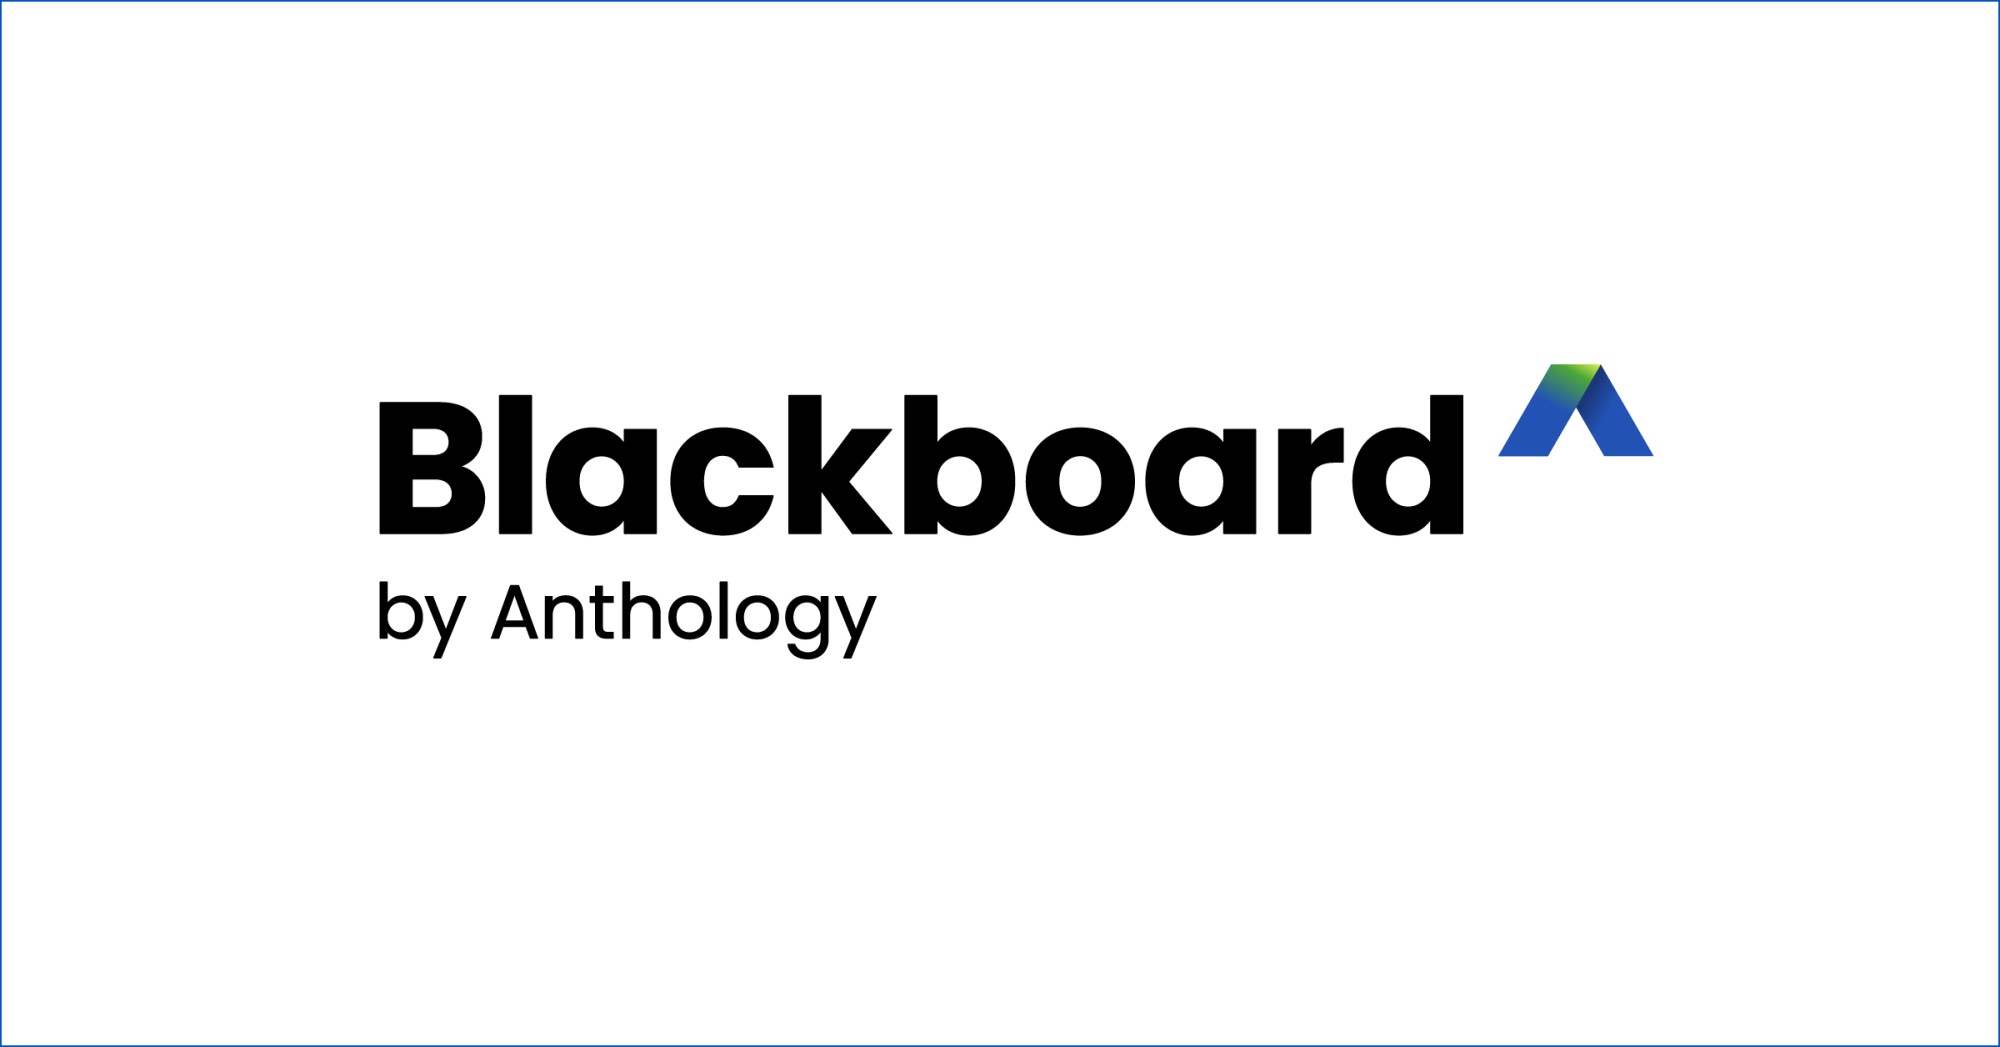 The Blackboard by Anthology logo